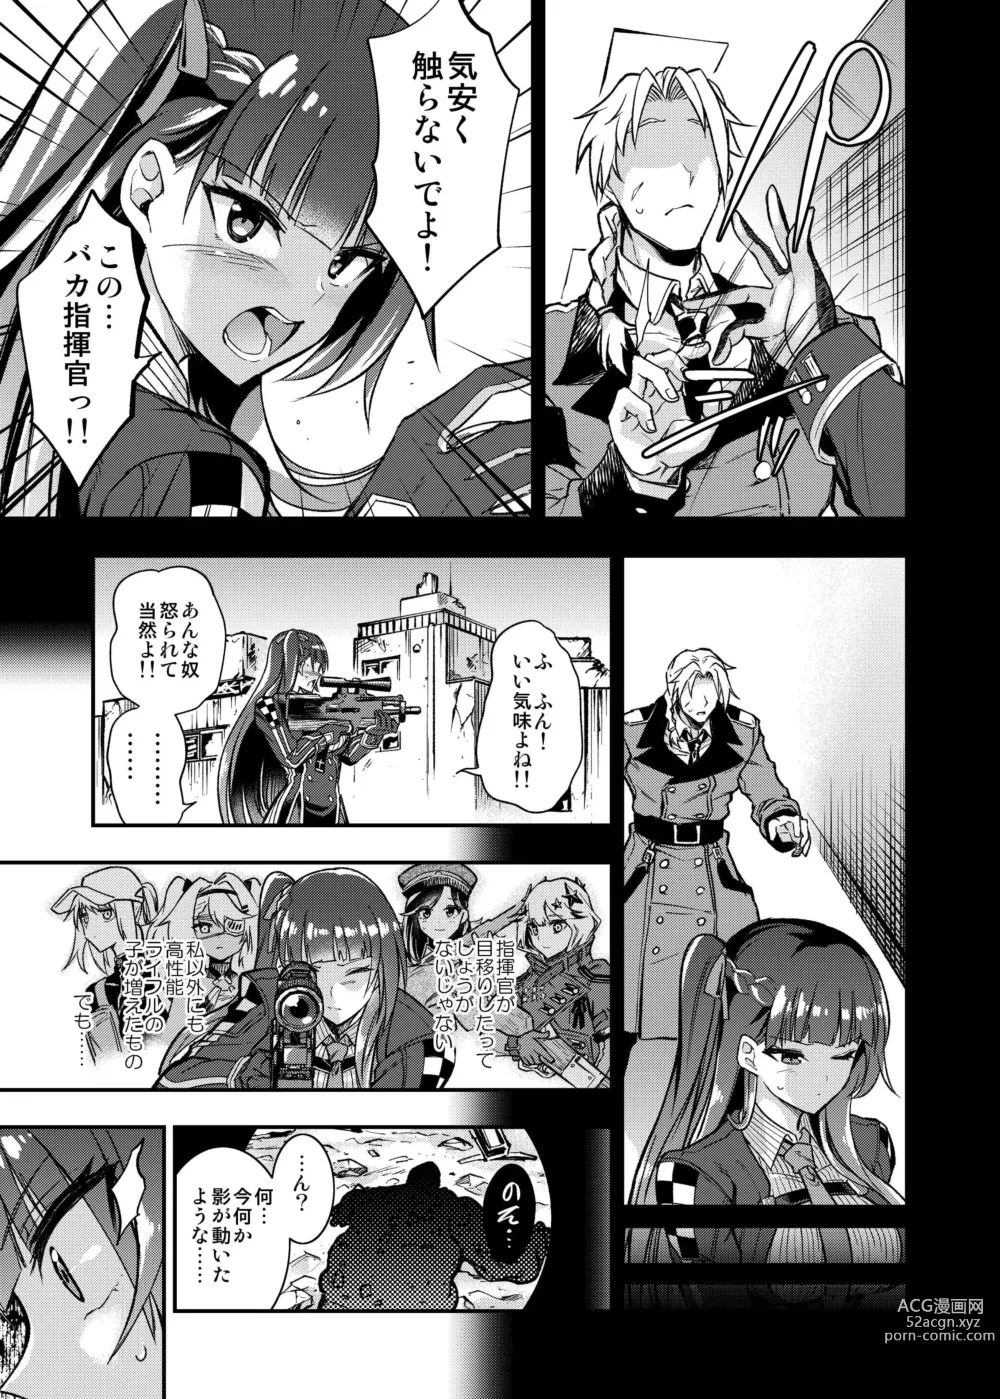 Page 6 of doujinshi Marunomare Wa-chan